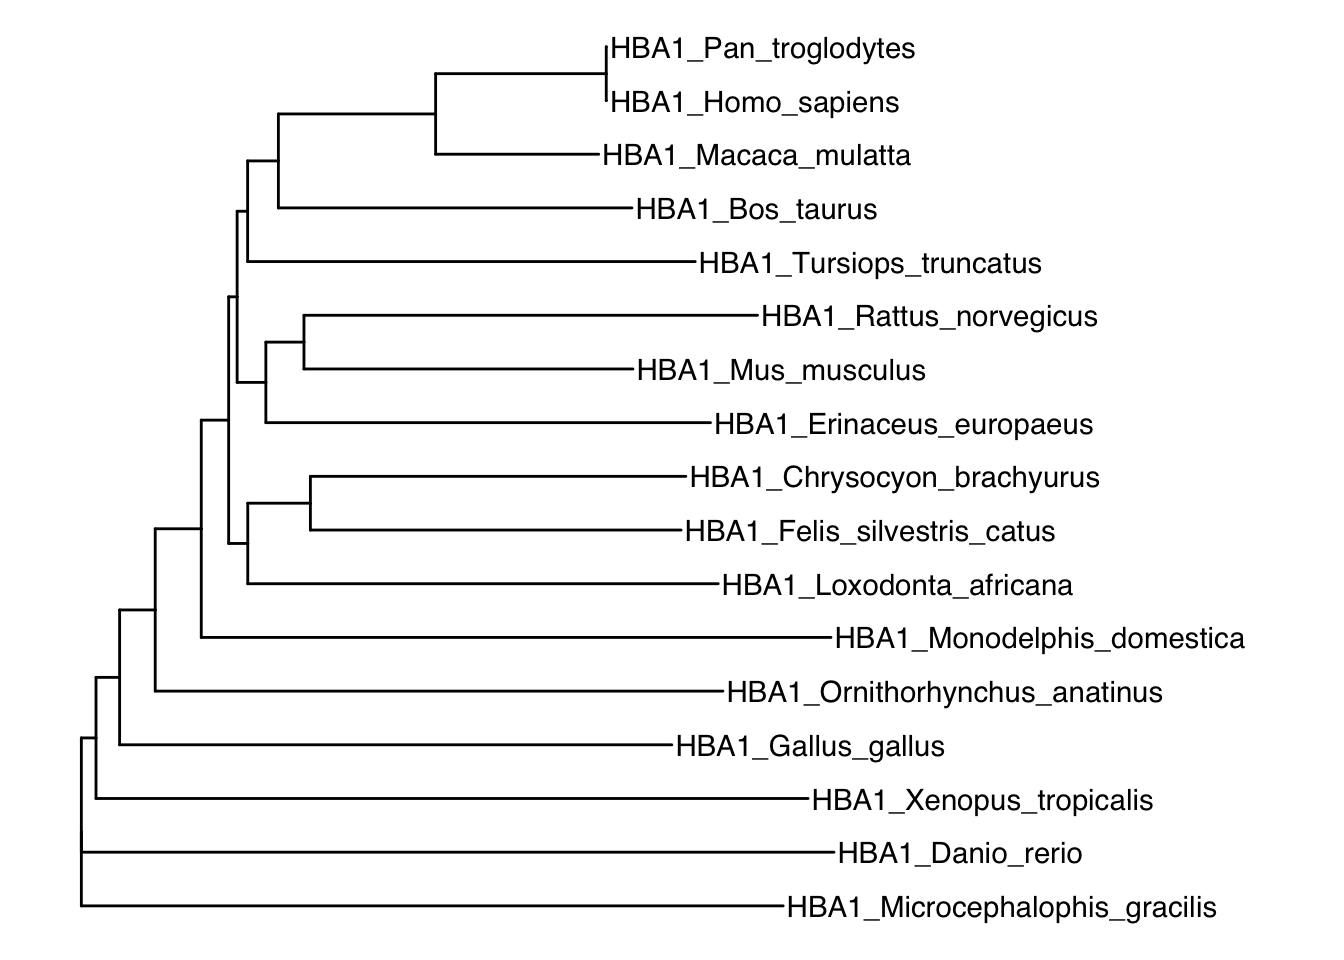 Neighbor-joining tree of different vertebrates based on hemoglobin ⍺1 sequences.